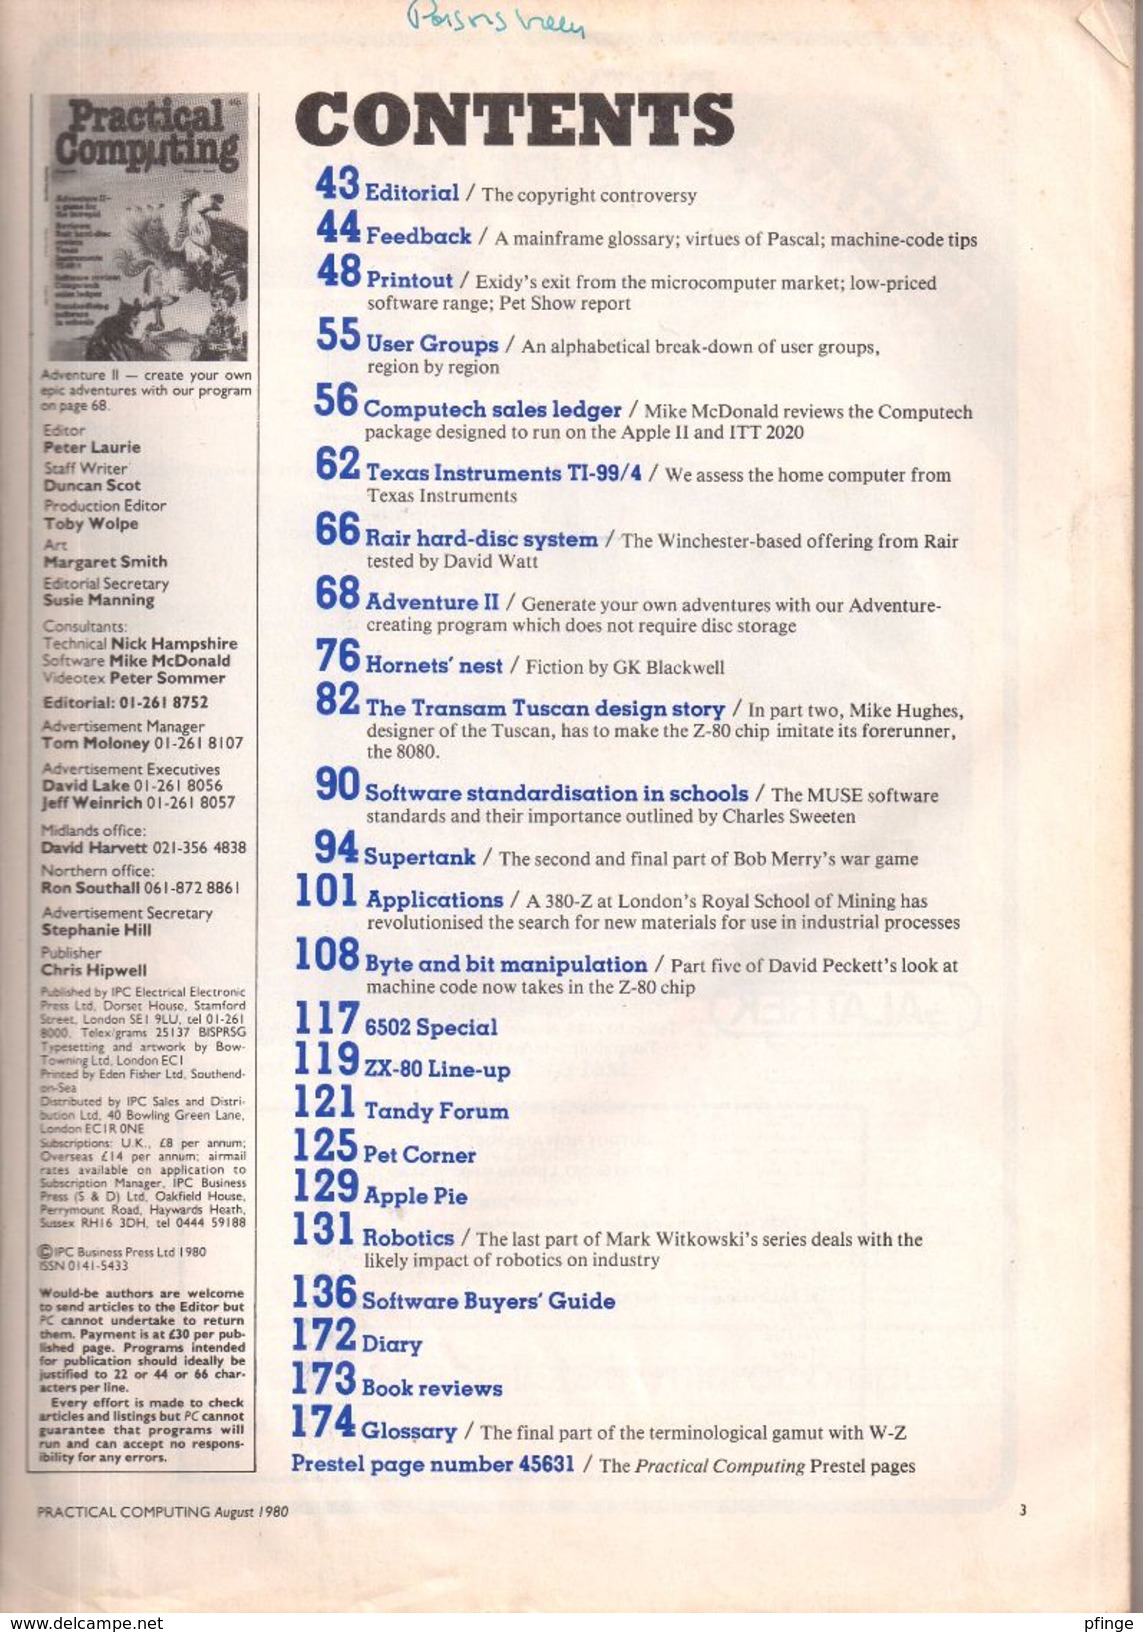 Practical Computing Vol 3 Issue 8, 1980 - Informatik/IT